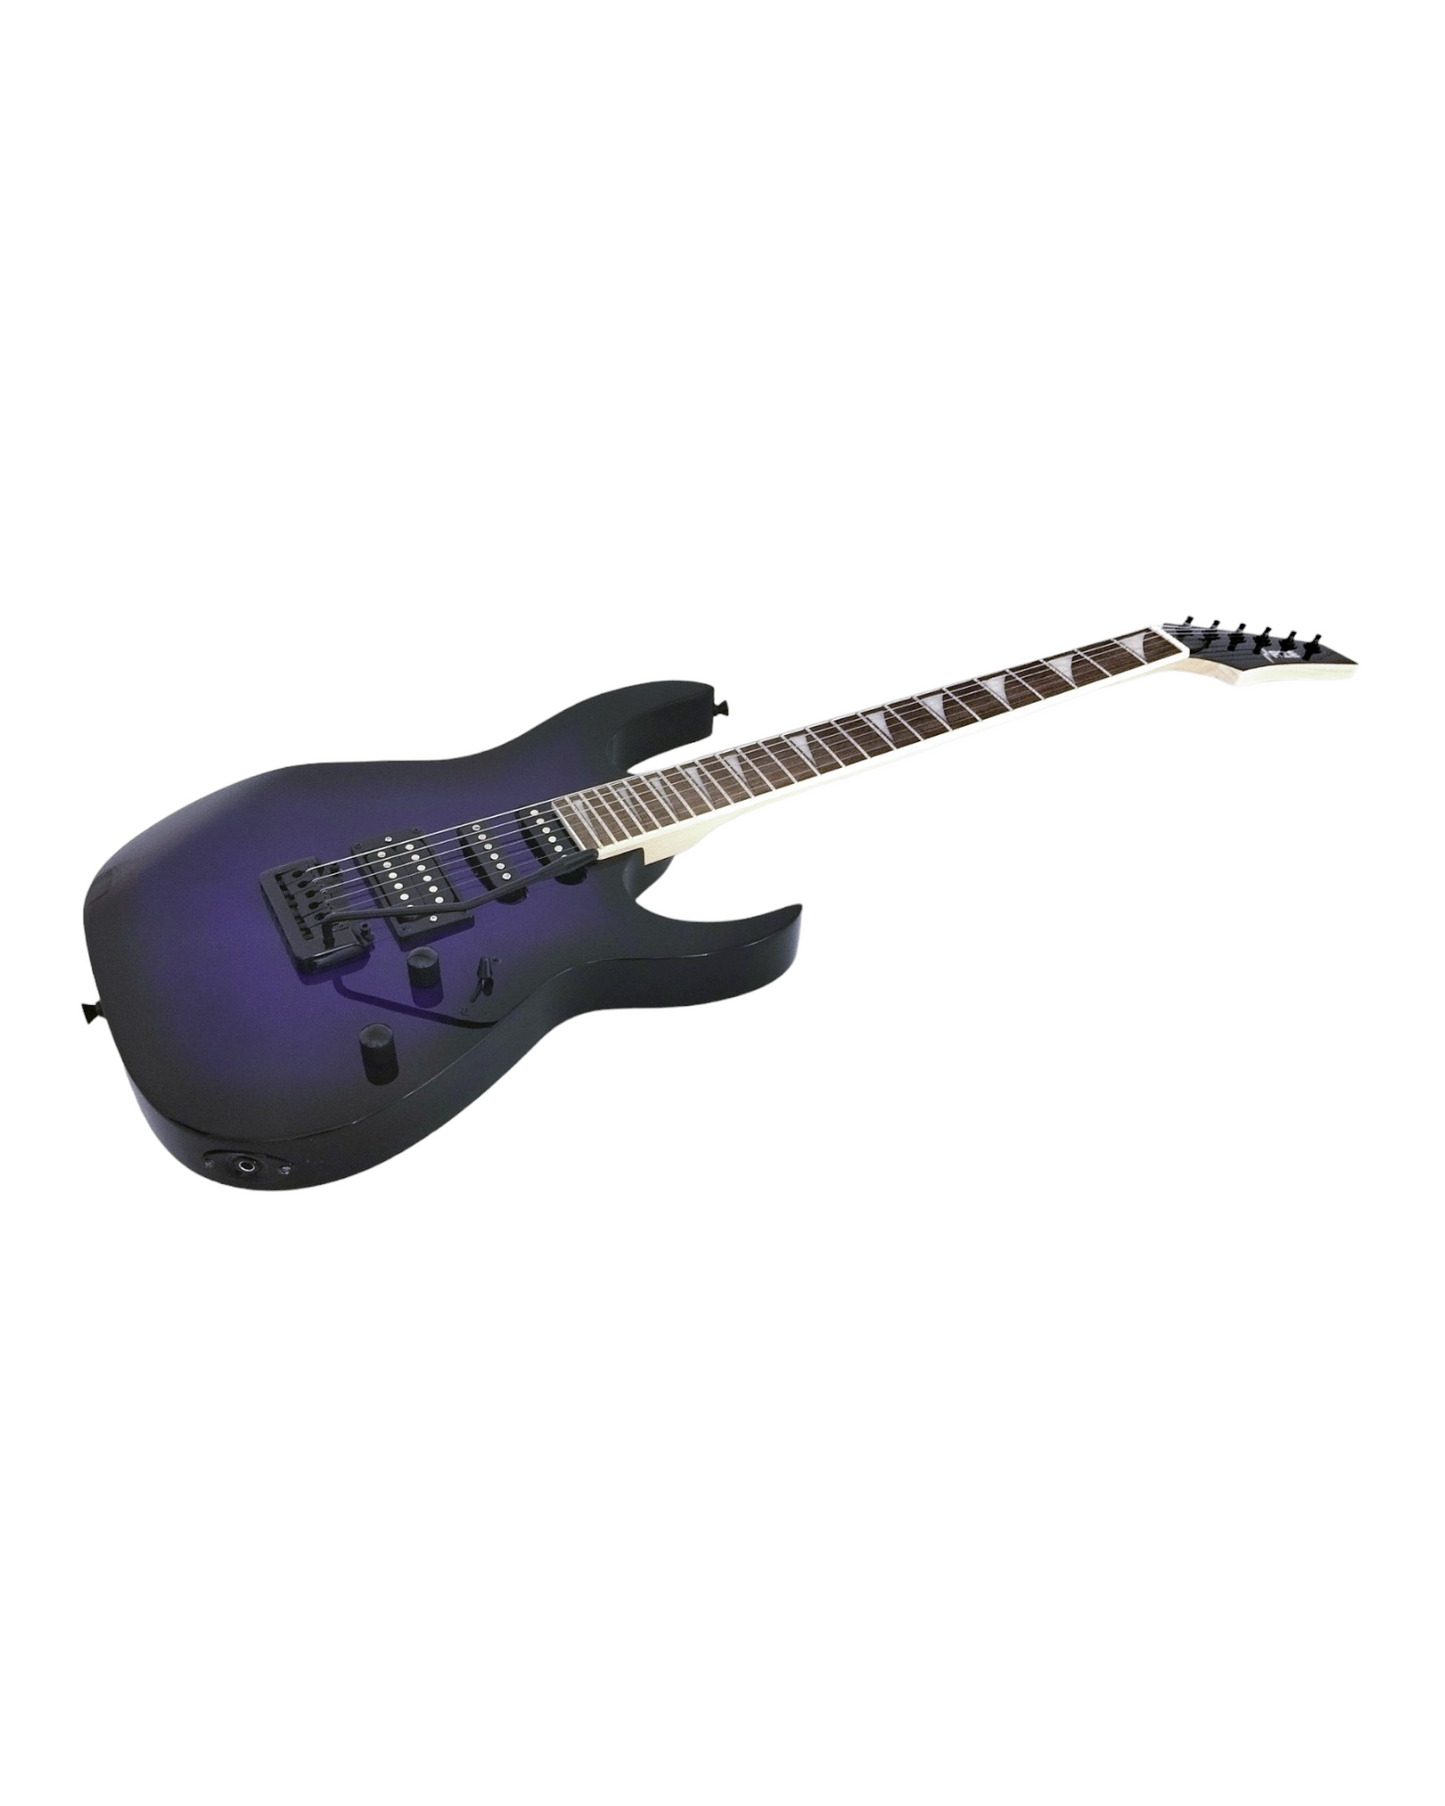 Haze Tremolo SSH Double Cutaway HRC Electric Guitar - Purpleburst 11HSJS1920DPB